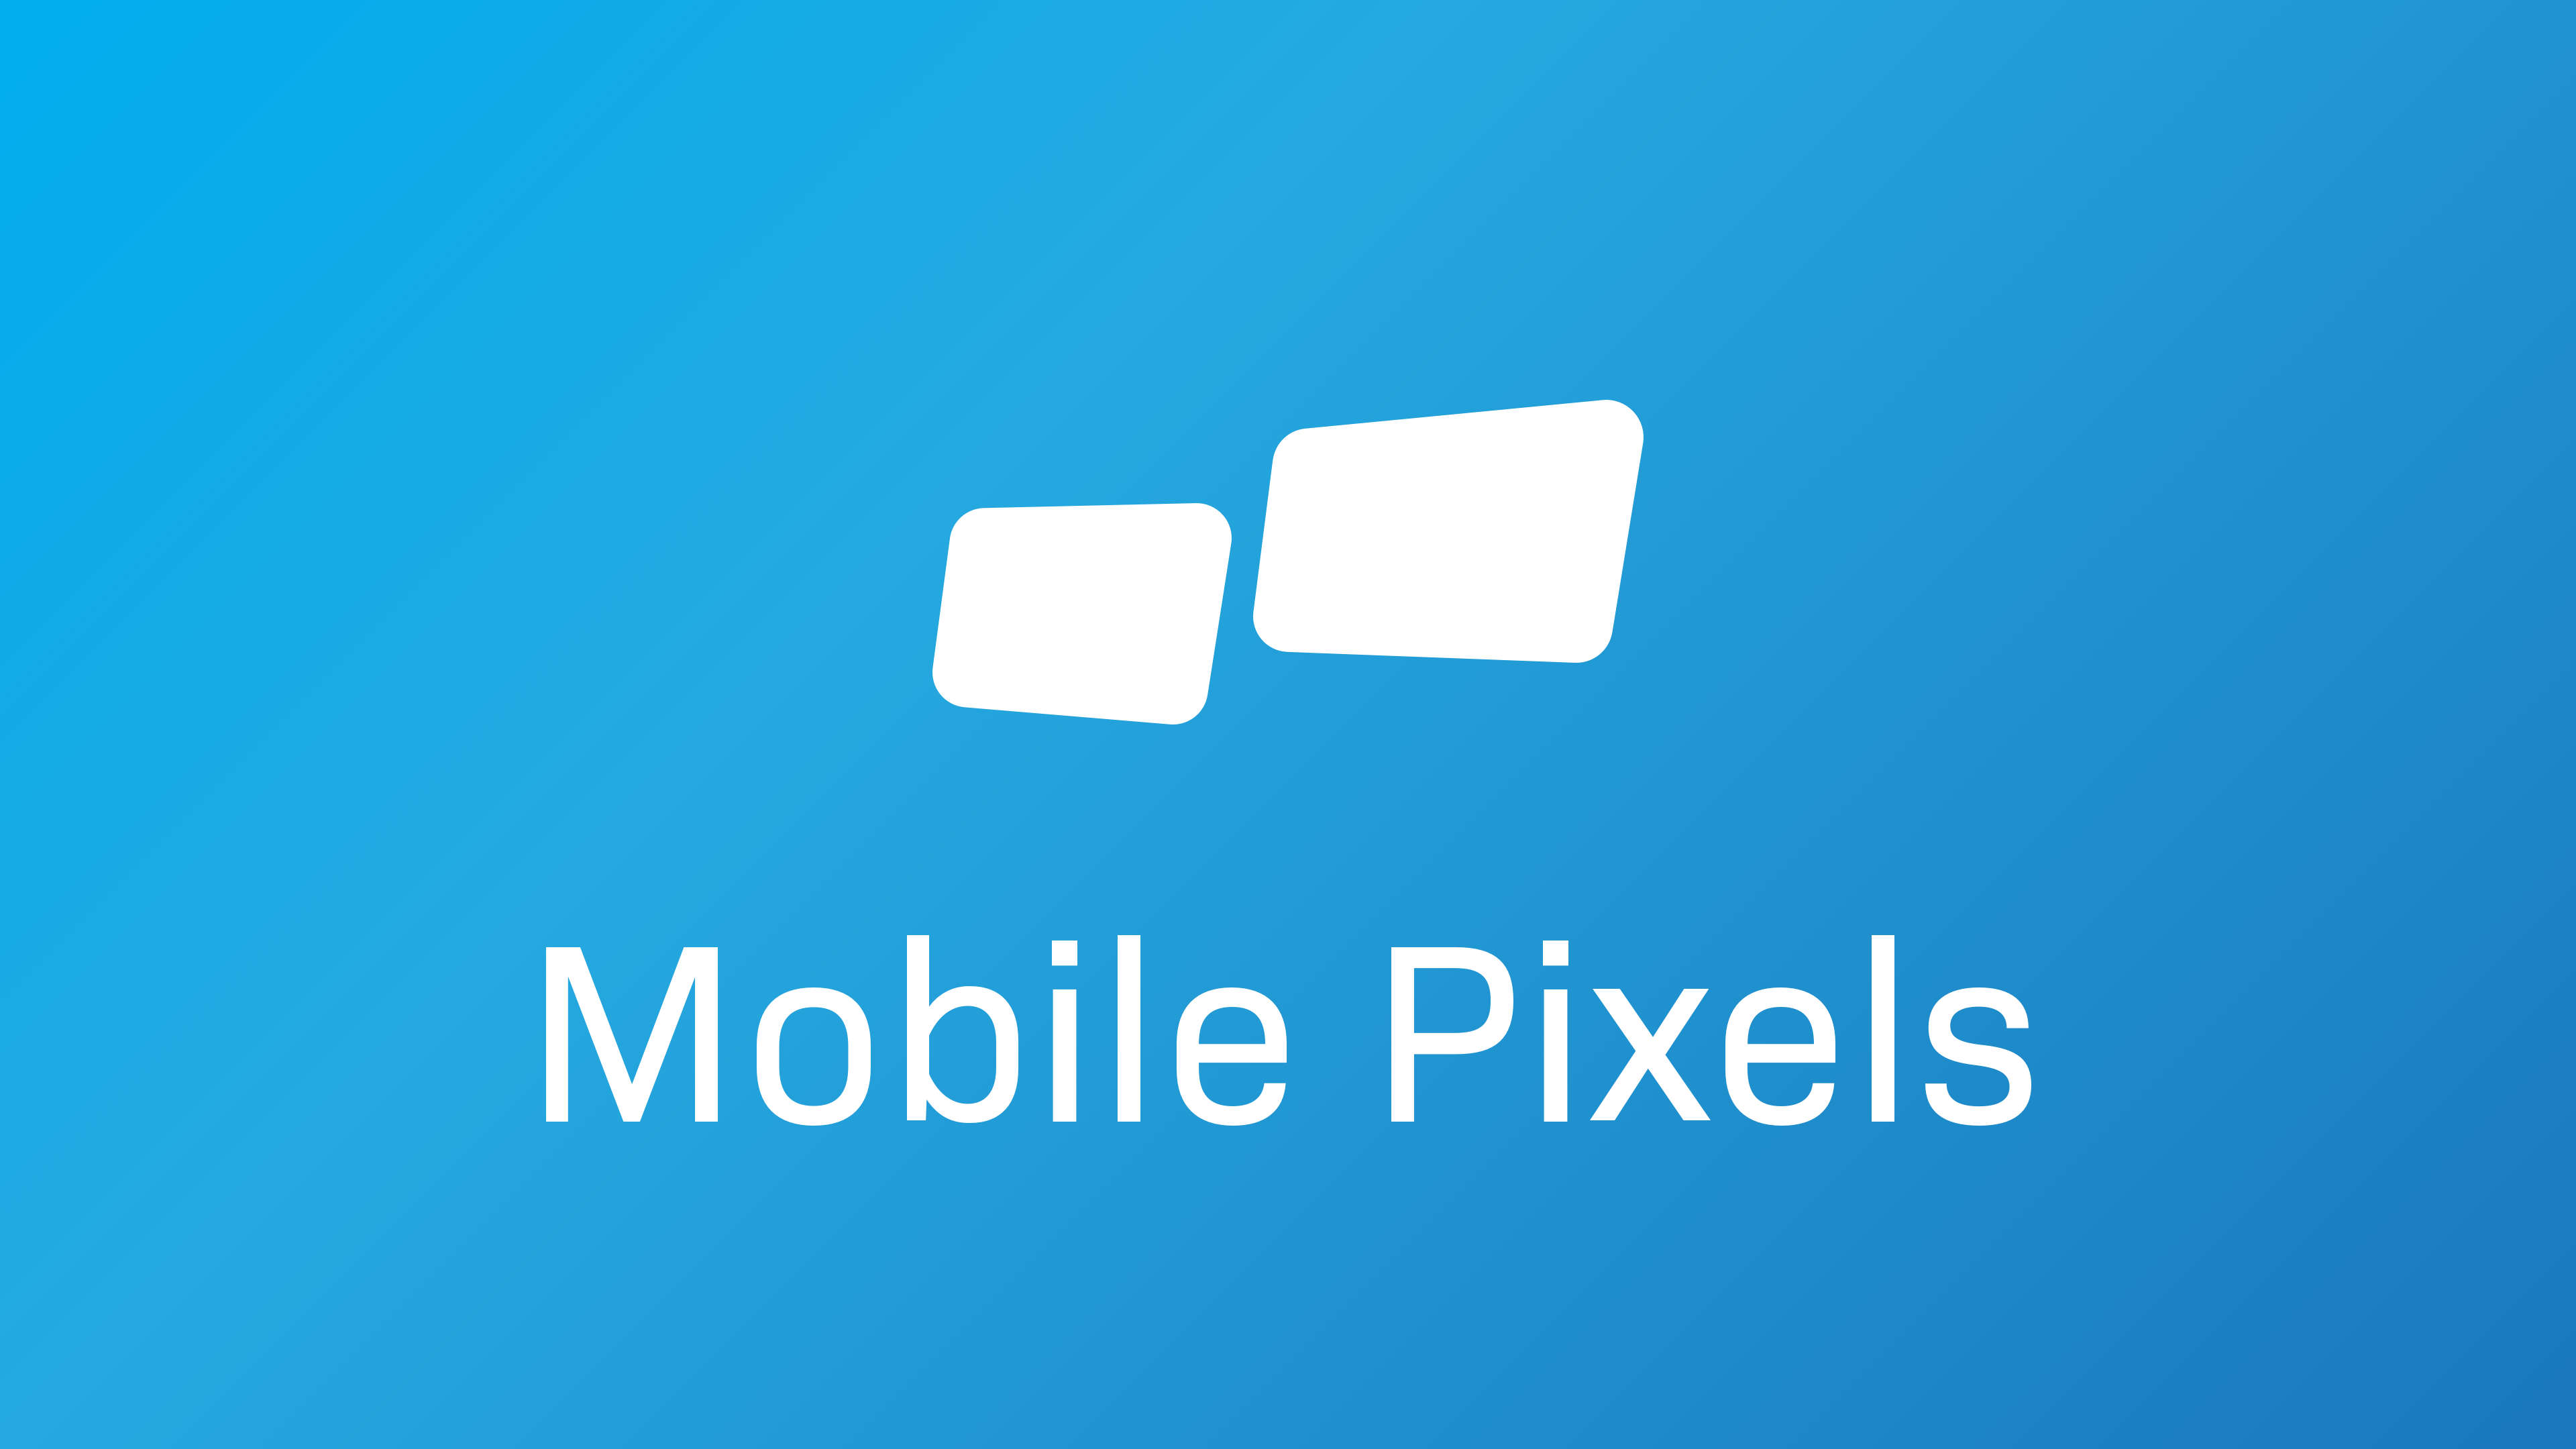 Mobile Pixels - Crunchbase Company Profile & Funding